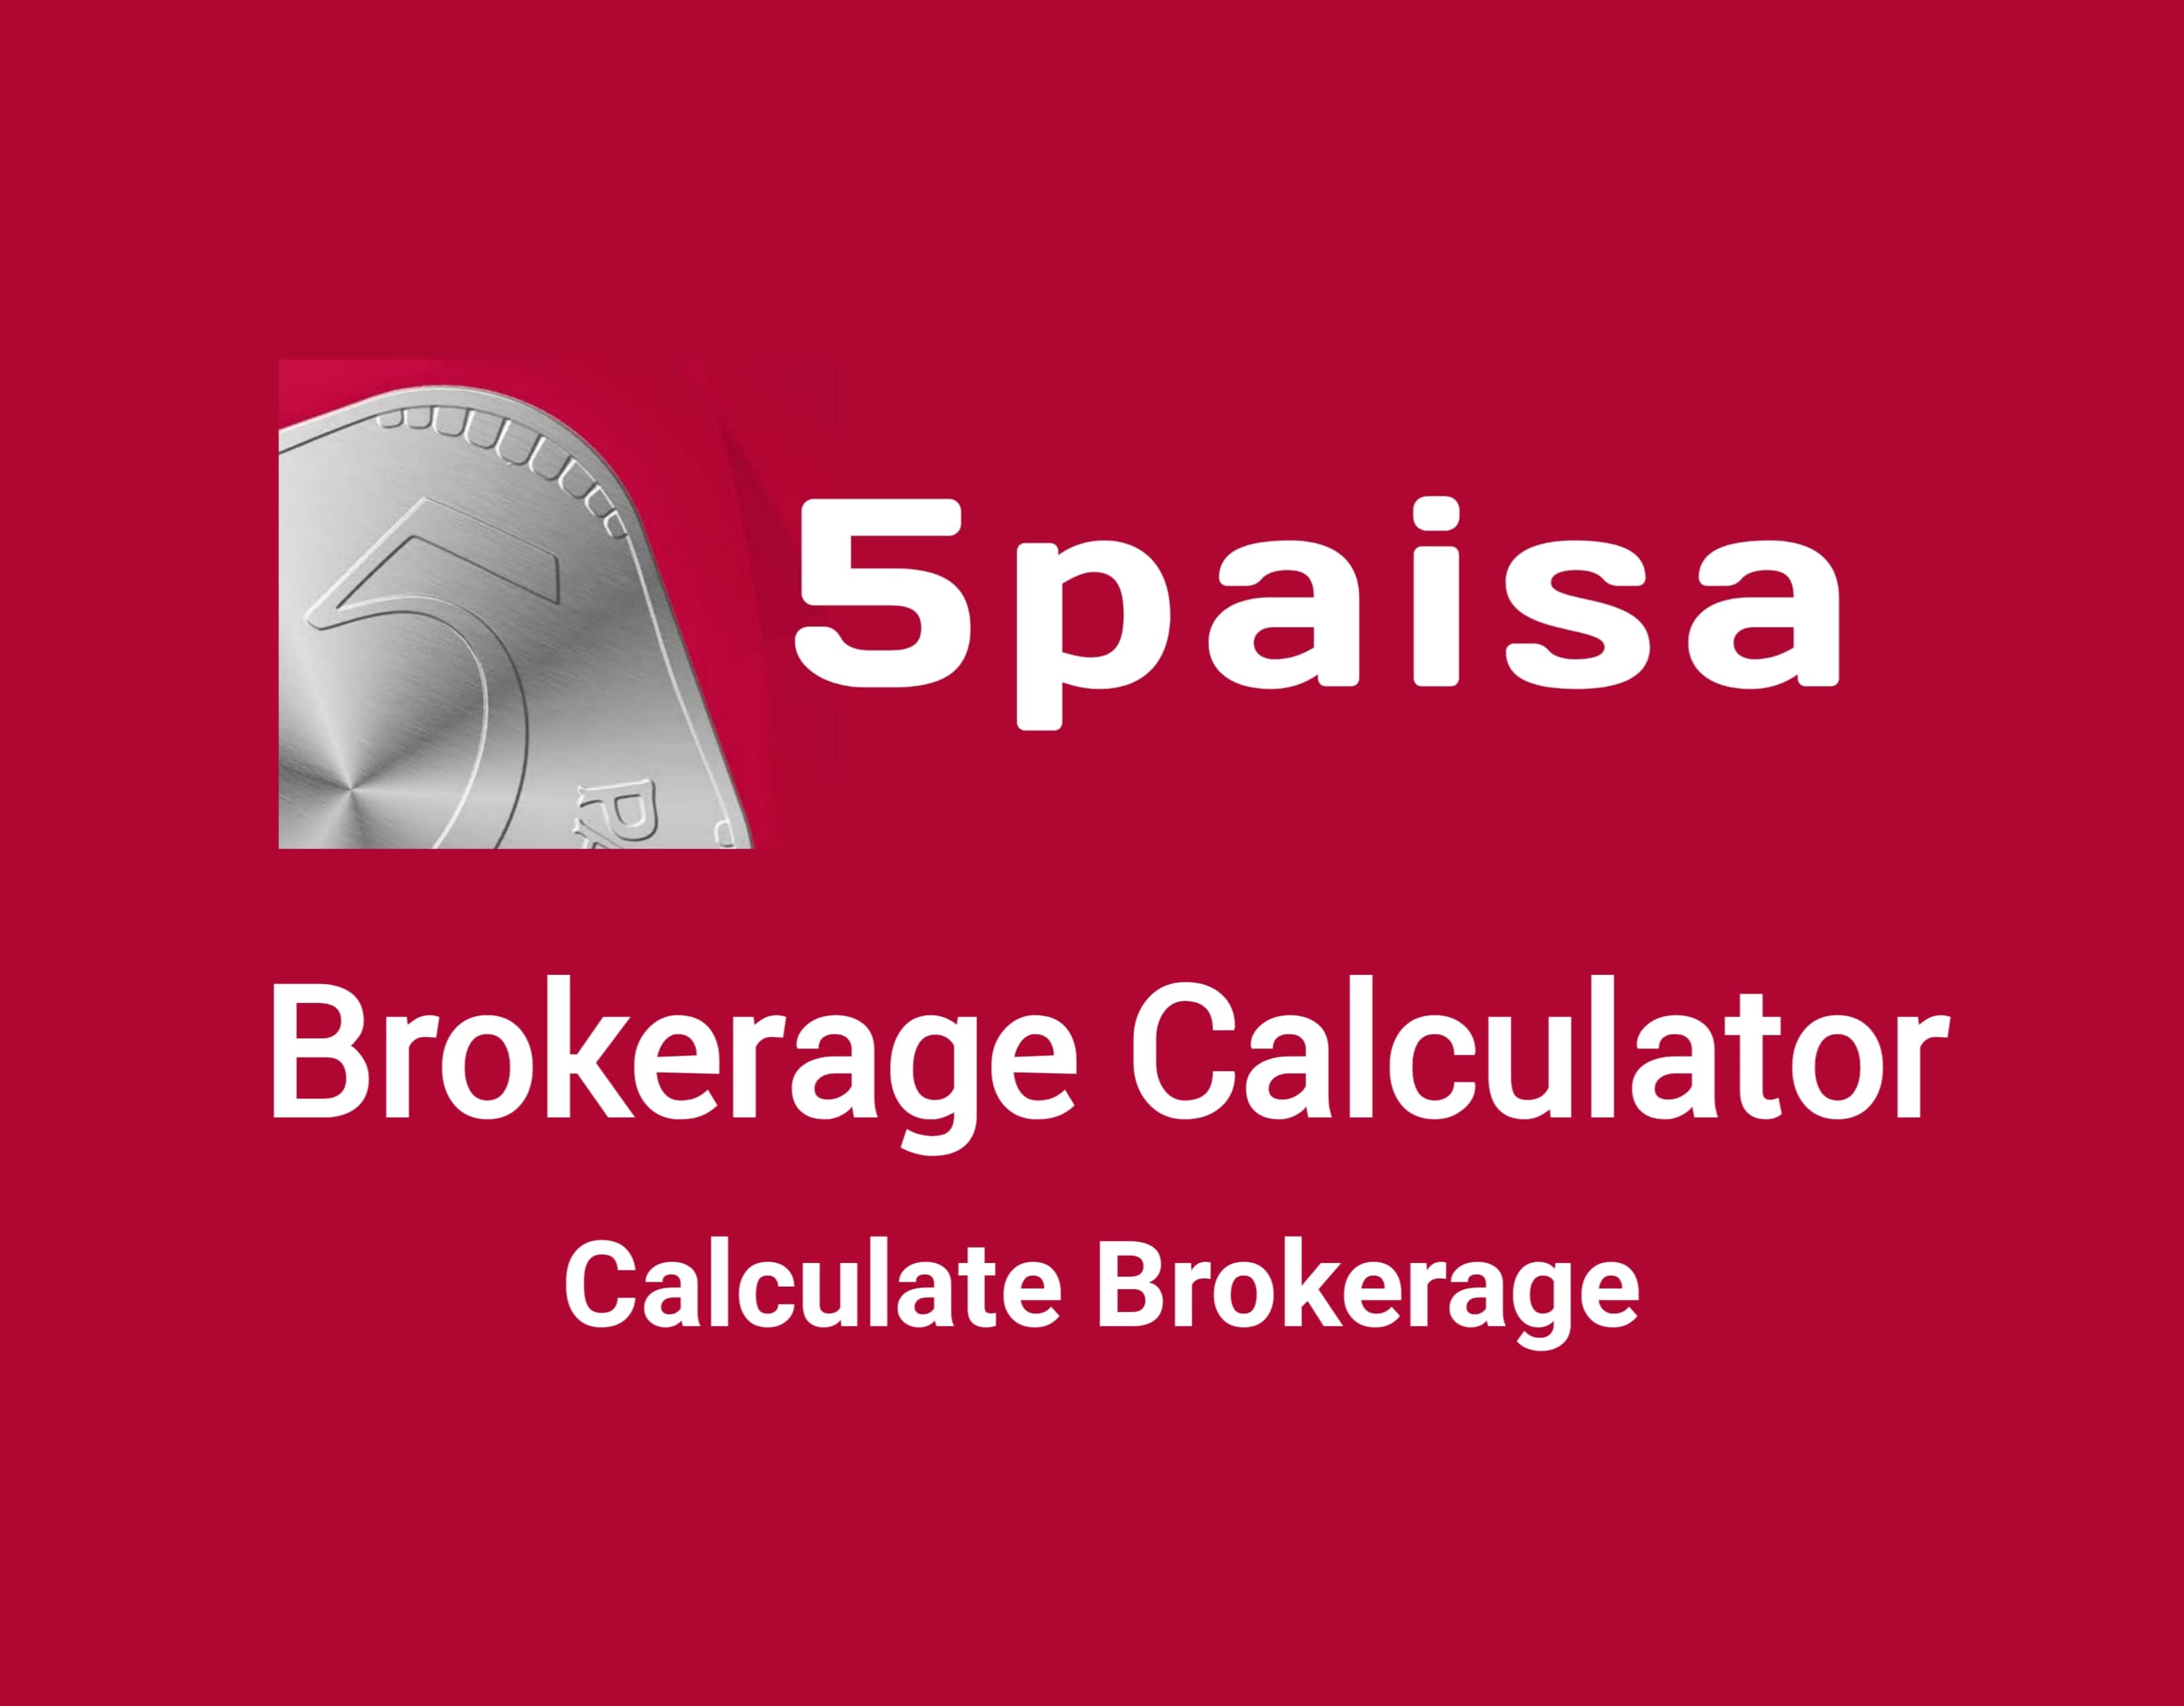 5paisa Brokerage Calculator